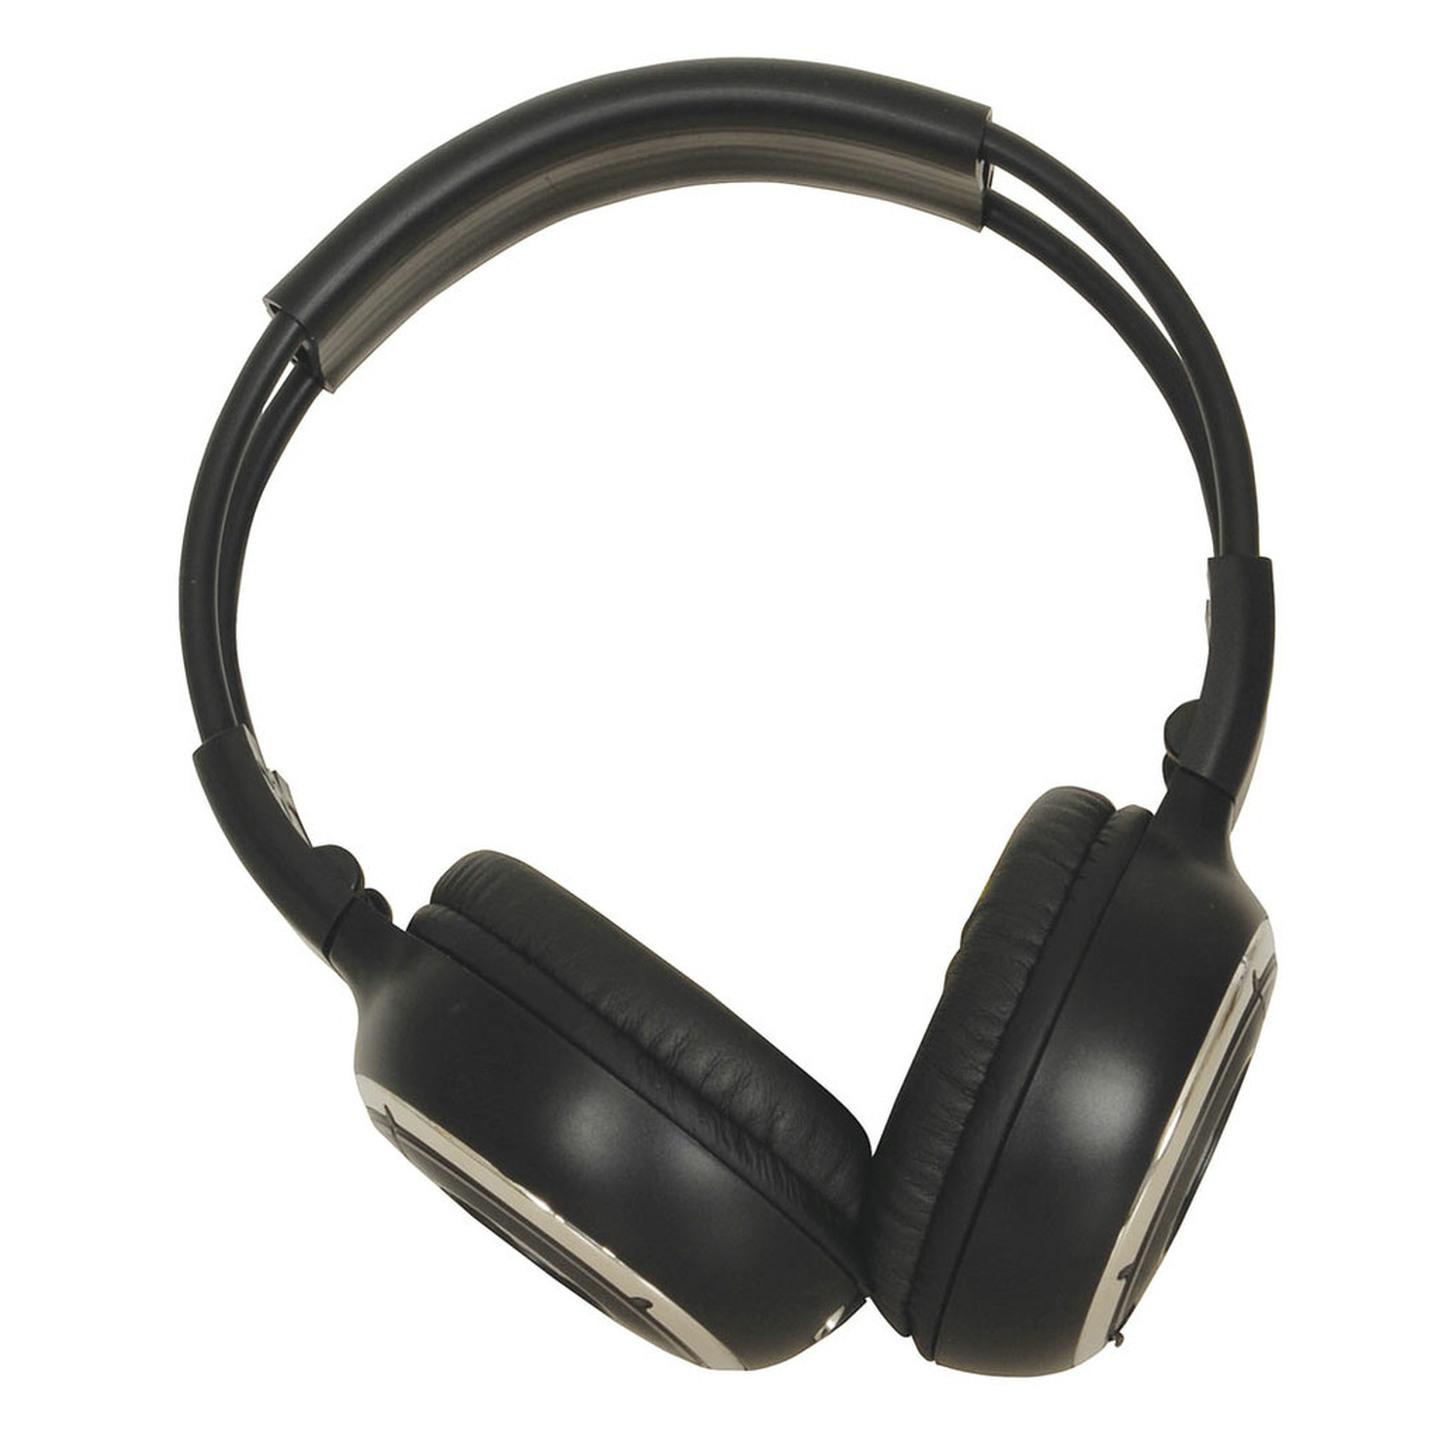 Response Wireless Infrared Stereo Headphones